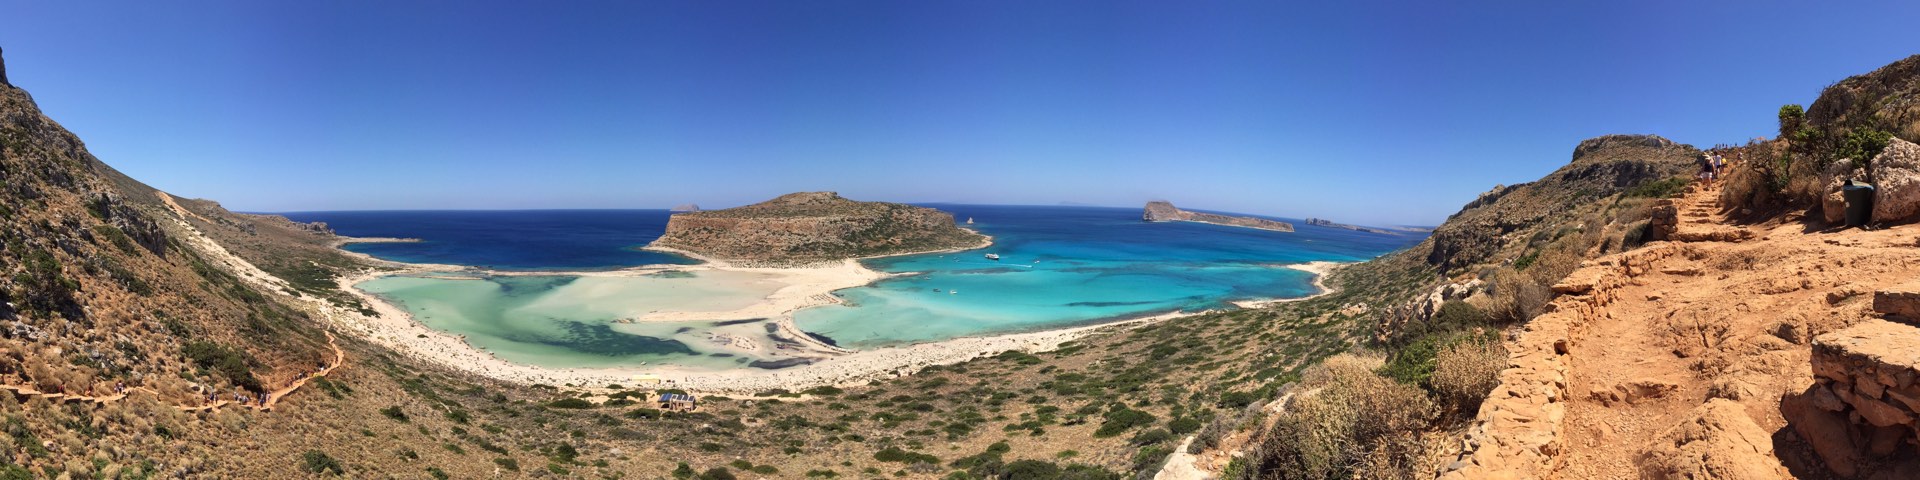 Crete, Chania, Balos